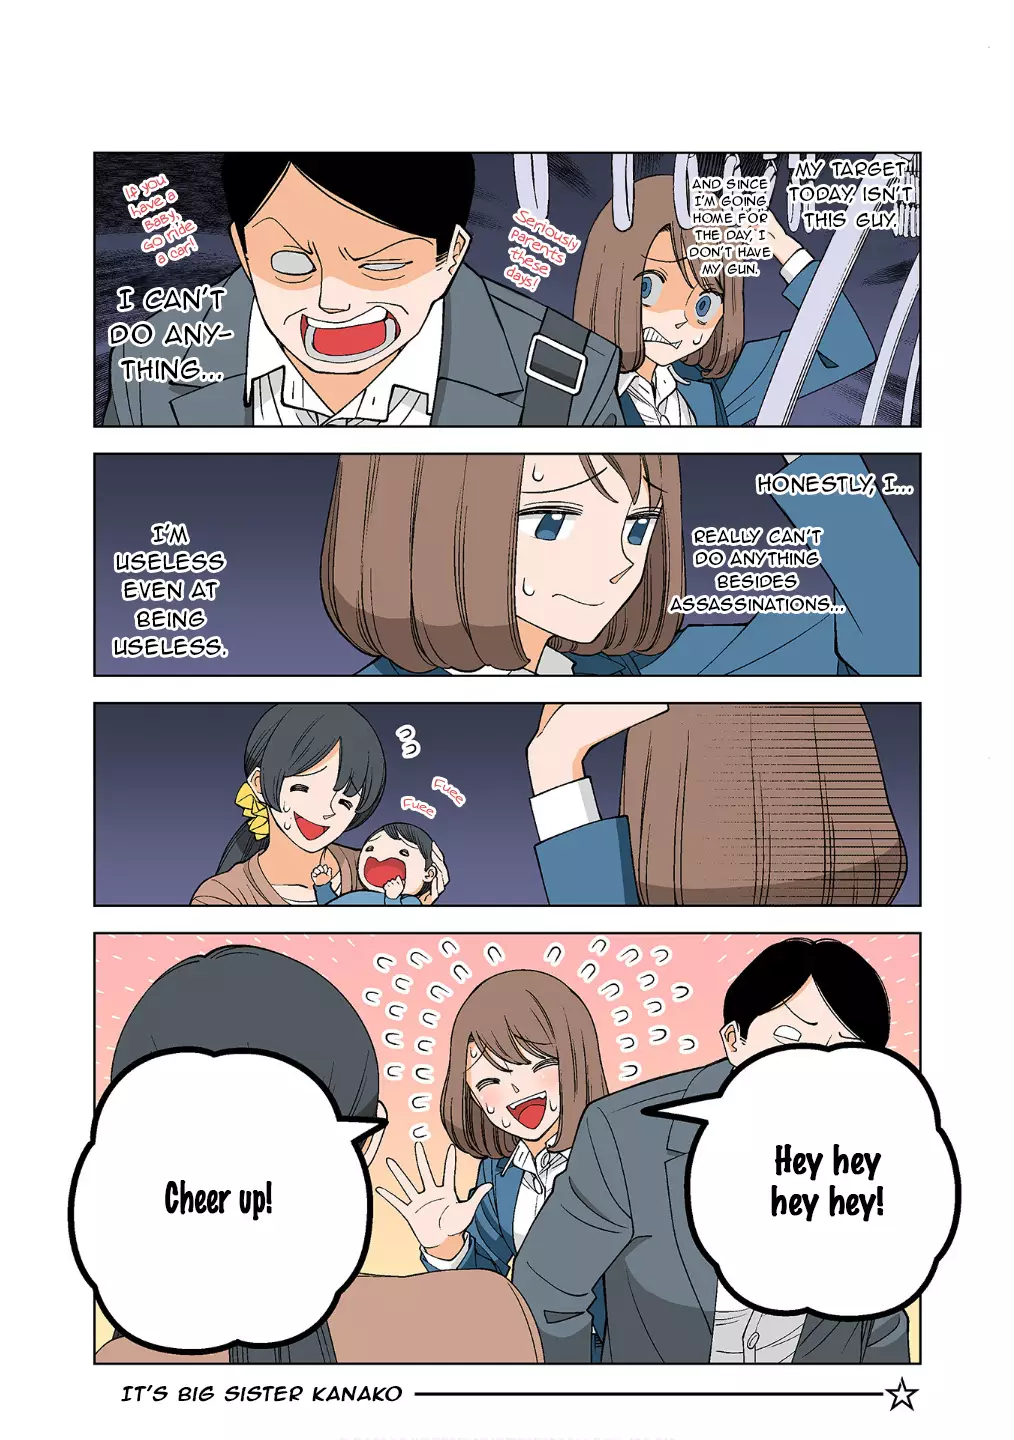 Kanako's Life As An Assassin - 15 page 3